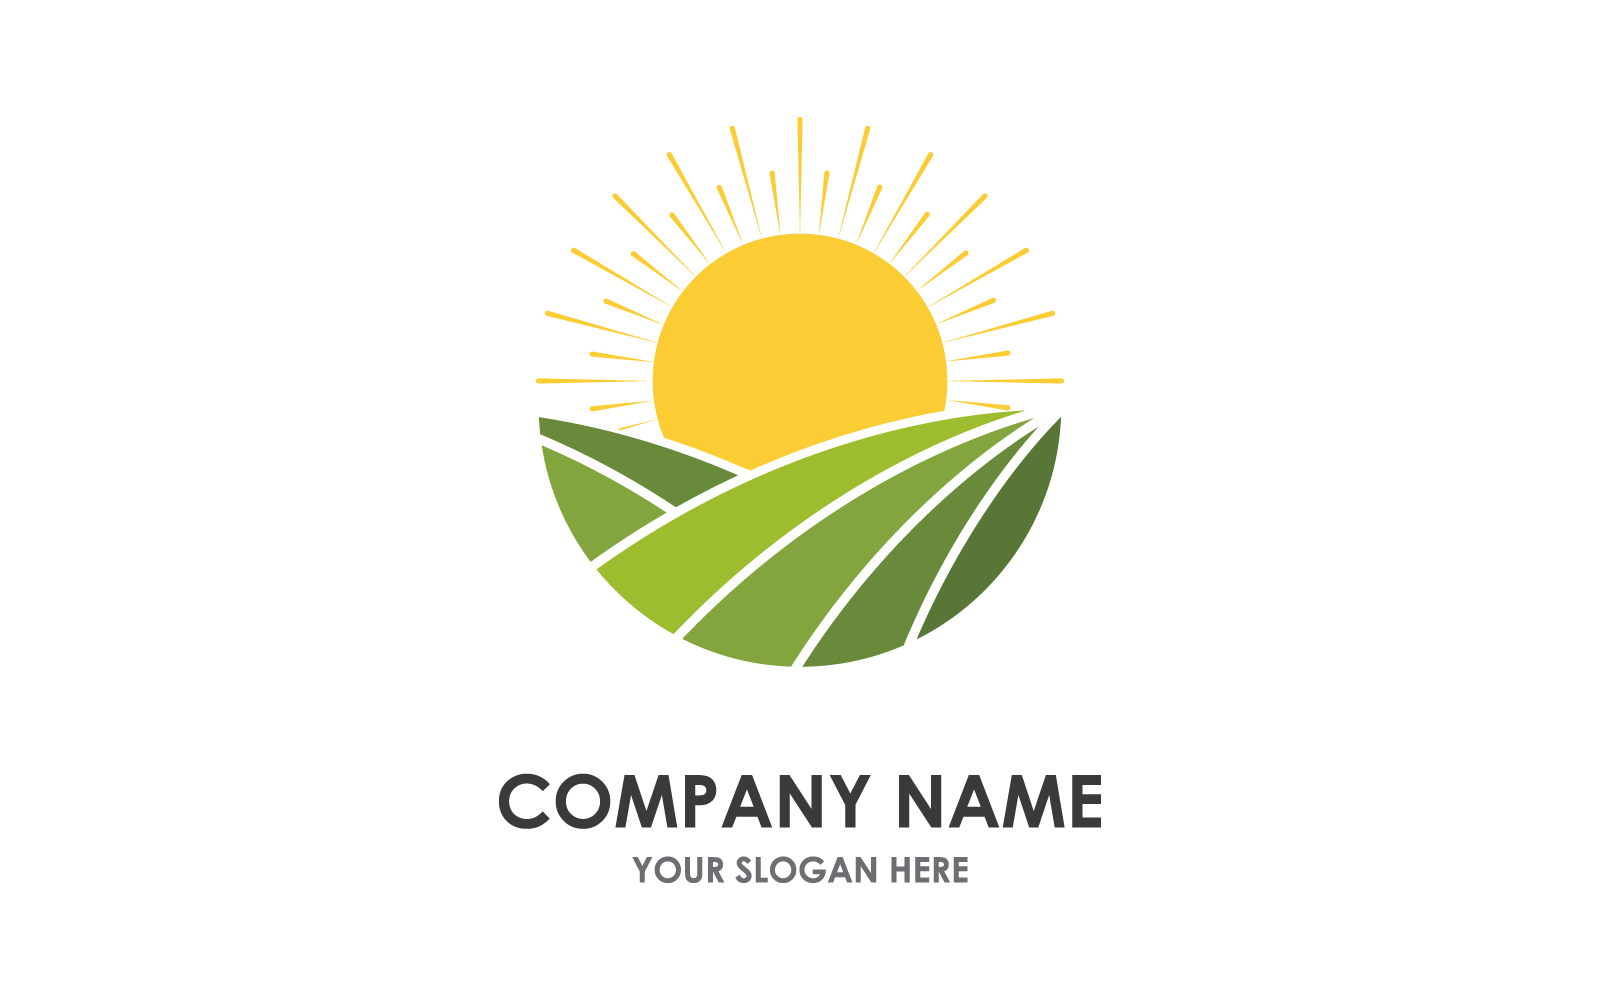 Farm house logo flat design template